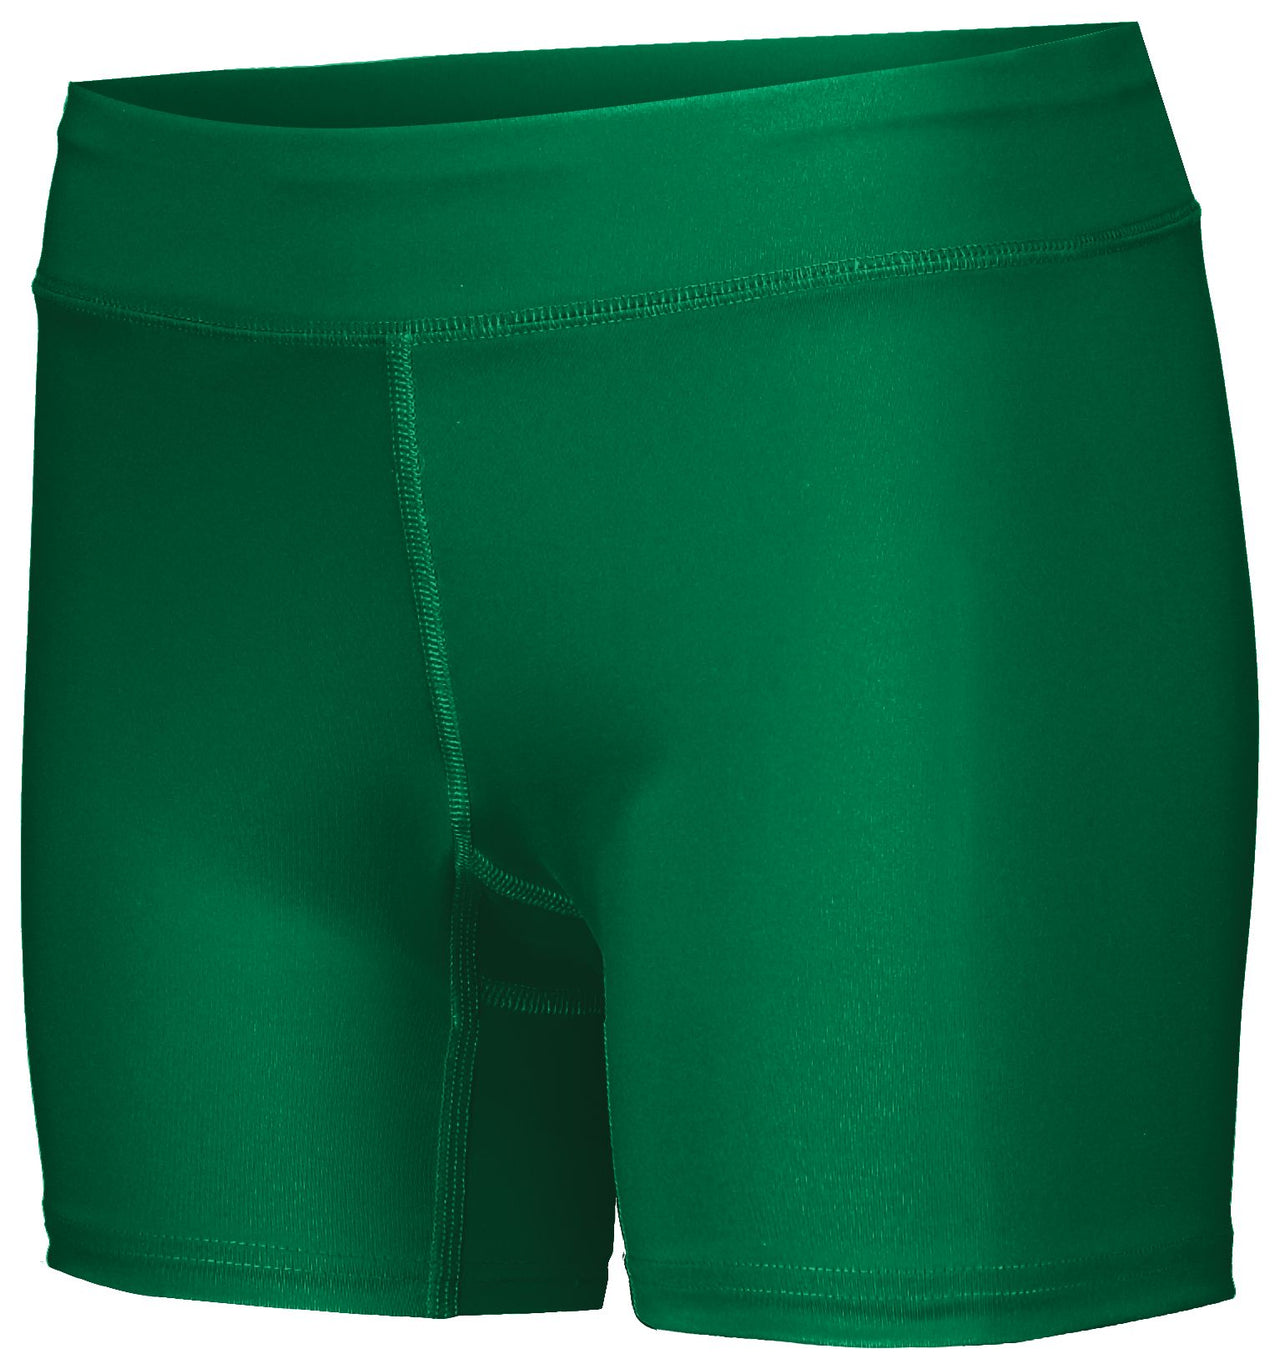 Ladies PR Max Compression Shorts - 221338